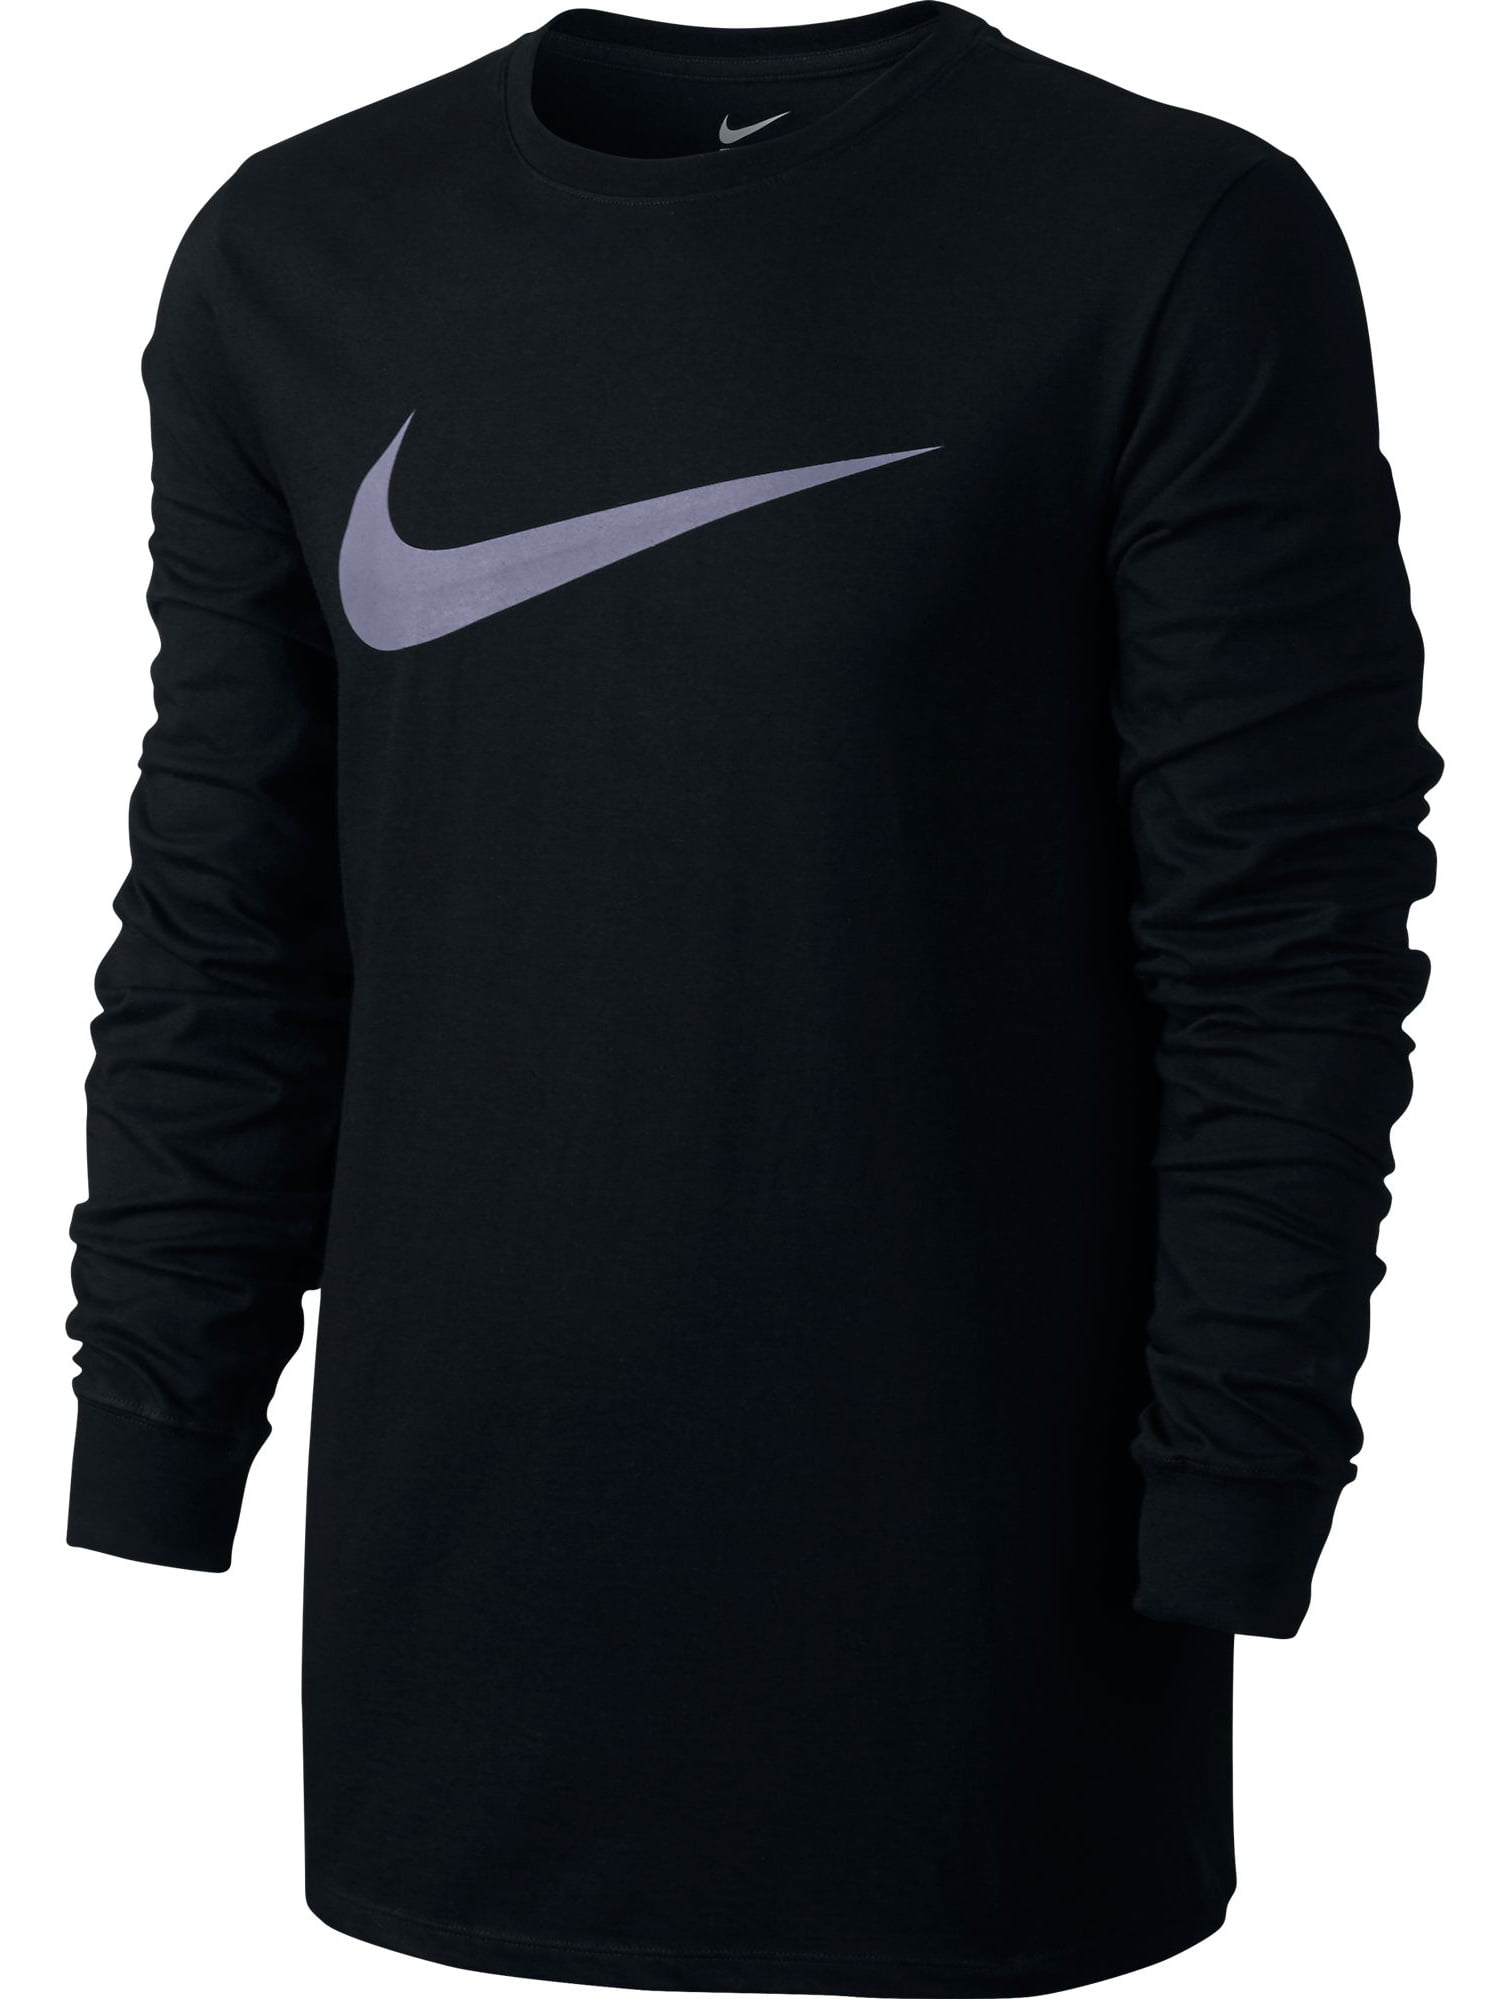 Nike - Nike Icon Swoosh Long Sleeve Men's T-shirt Black/Grey 709491-010 - Walmart.com - Walmart.com